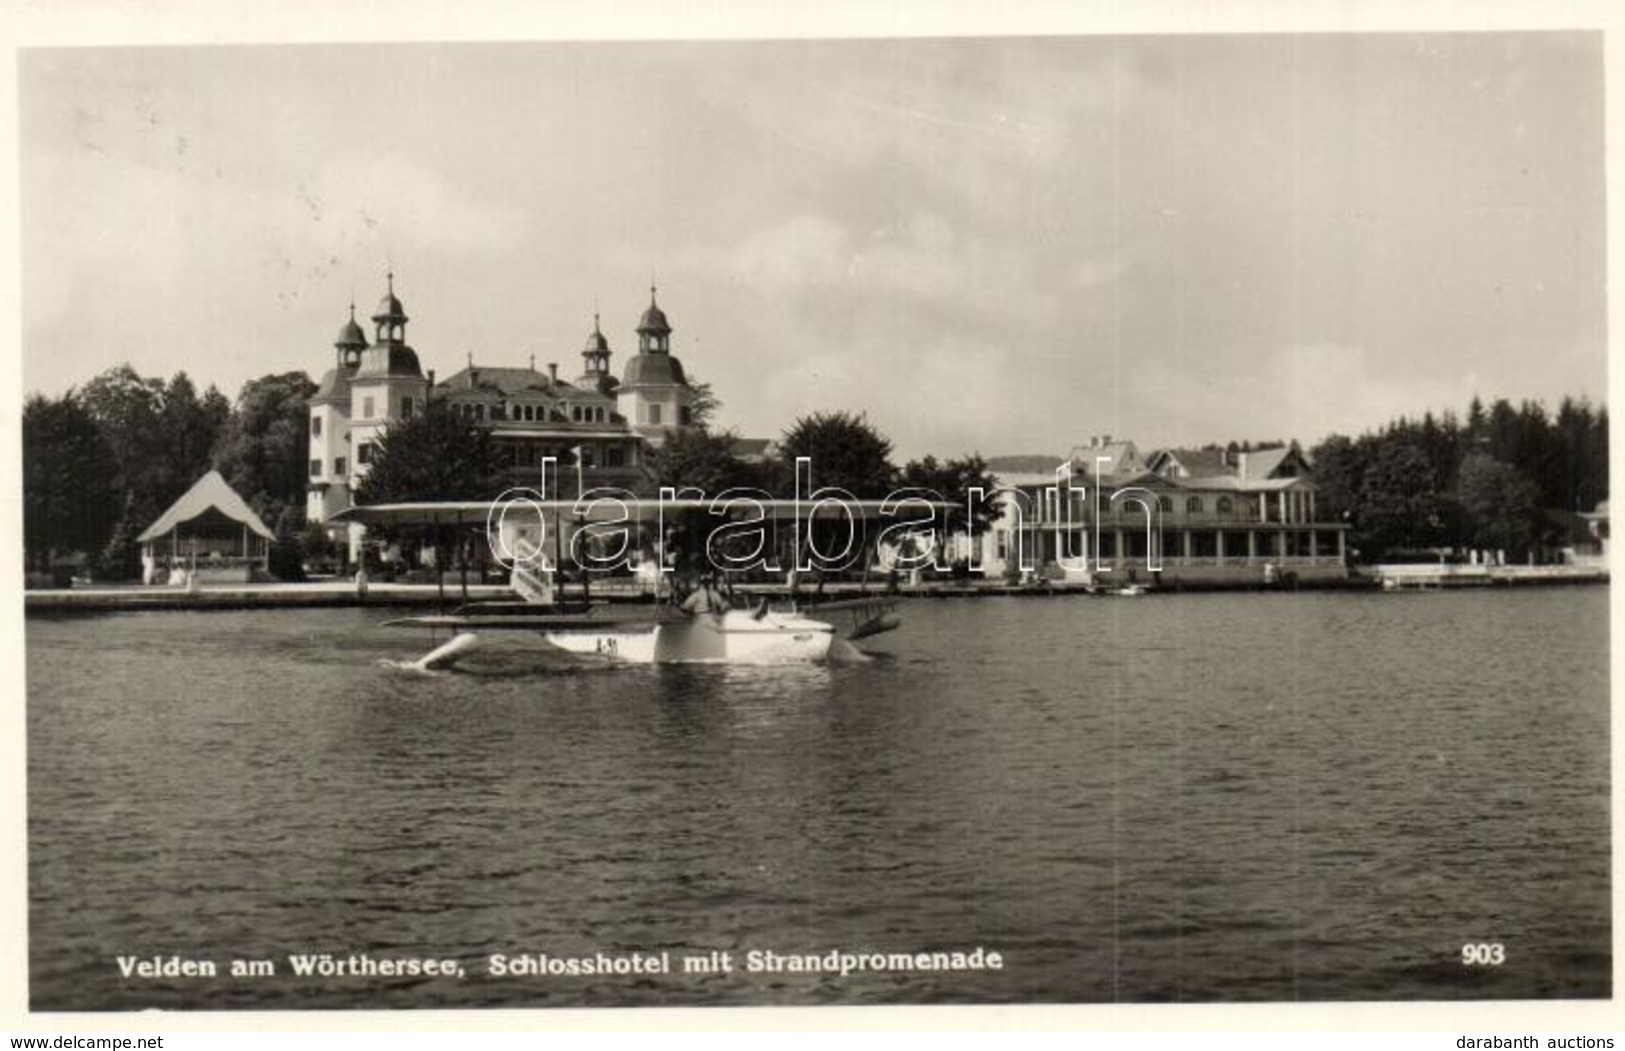 T2 Velden Am Wörthersee, Schlosshotel Mit Strandpromenade / Castle Hotel With Promenade, Seaplane A-51 'Nelly'. Wir Flie - Unclassified